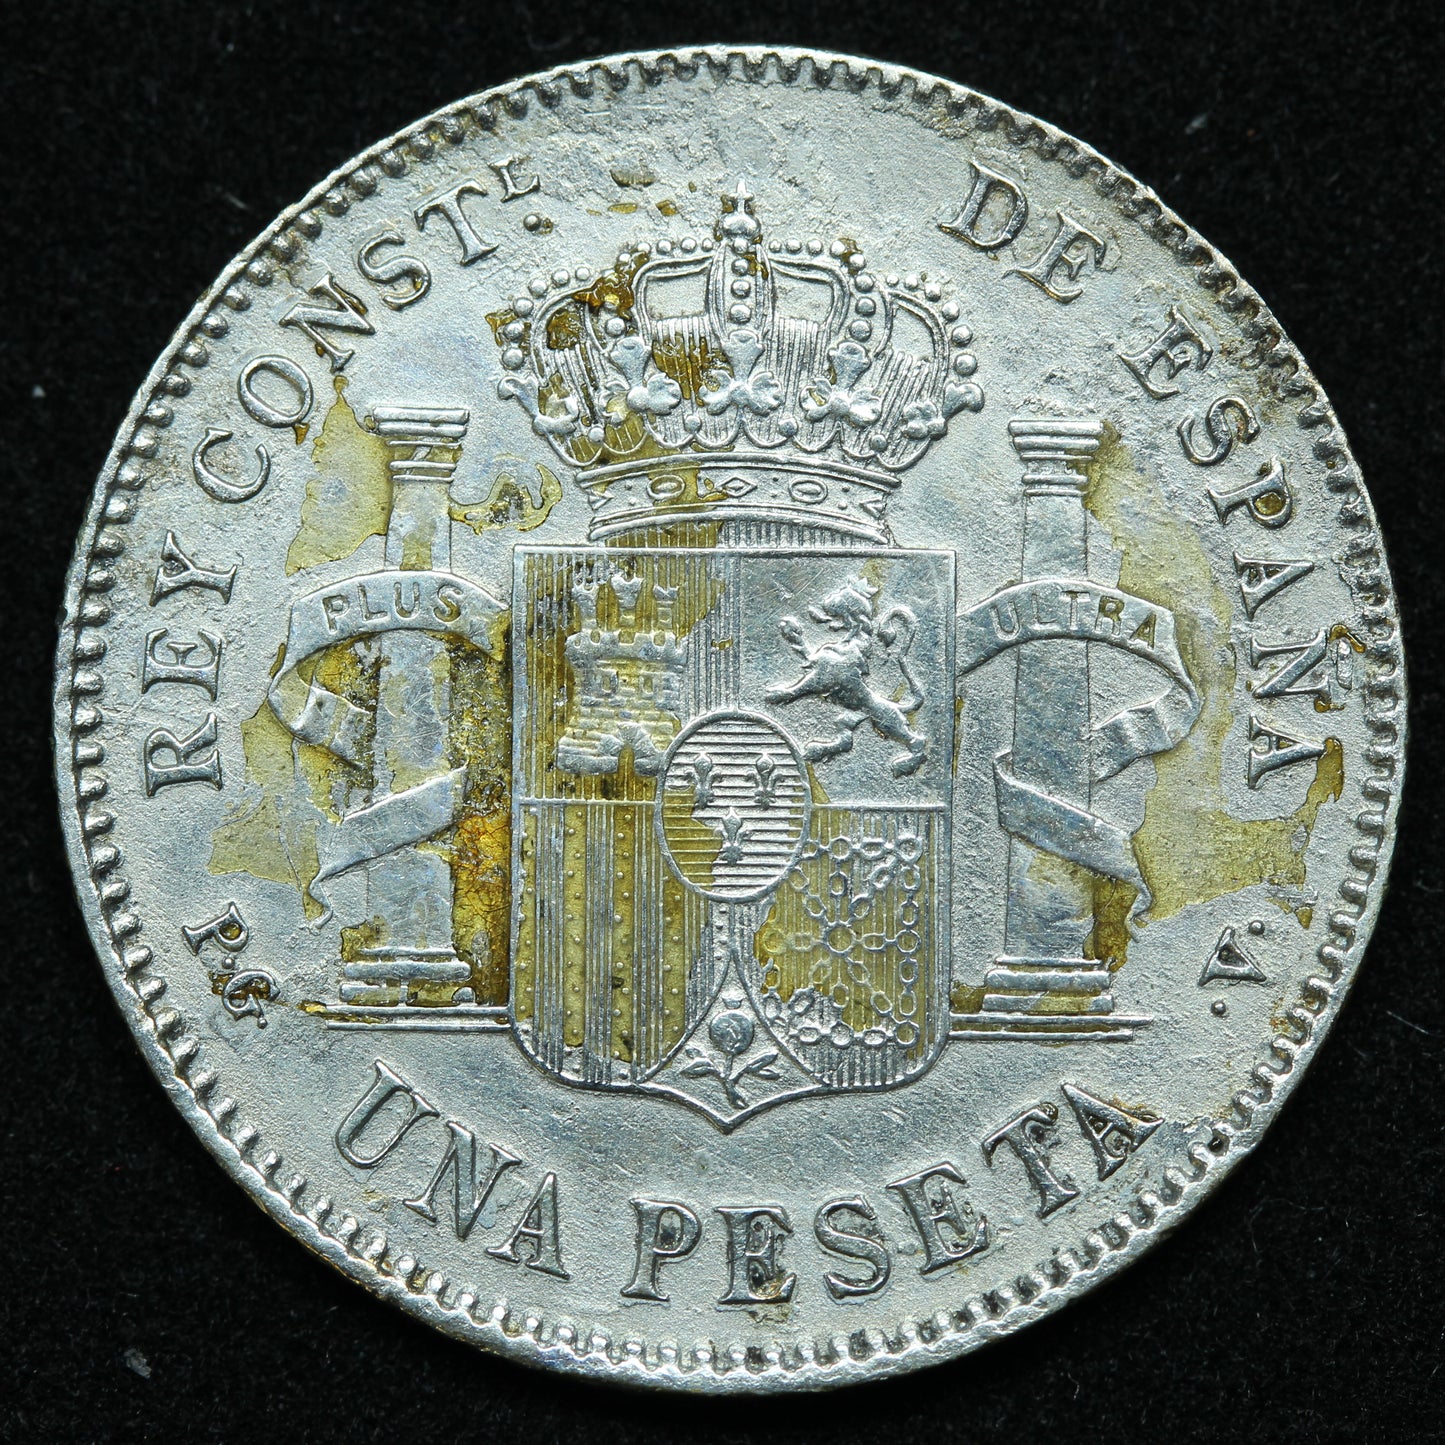 1896 Una Peseta Spain Silver Coin - ALFONSO XIII - KM# 706